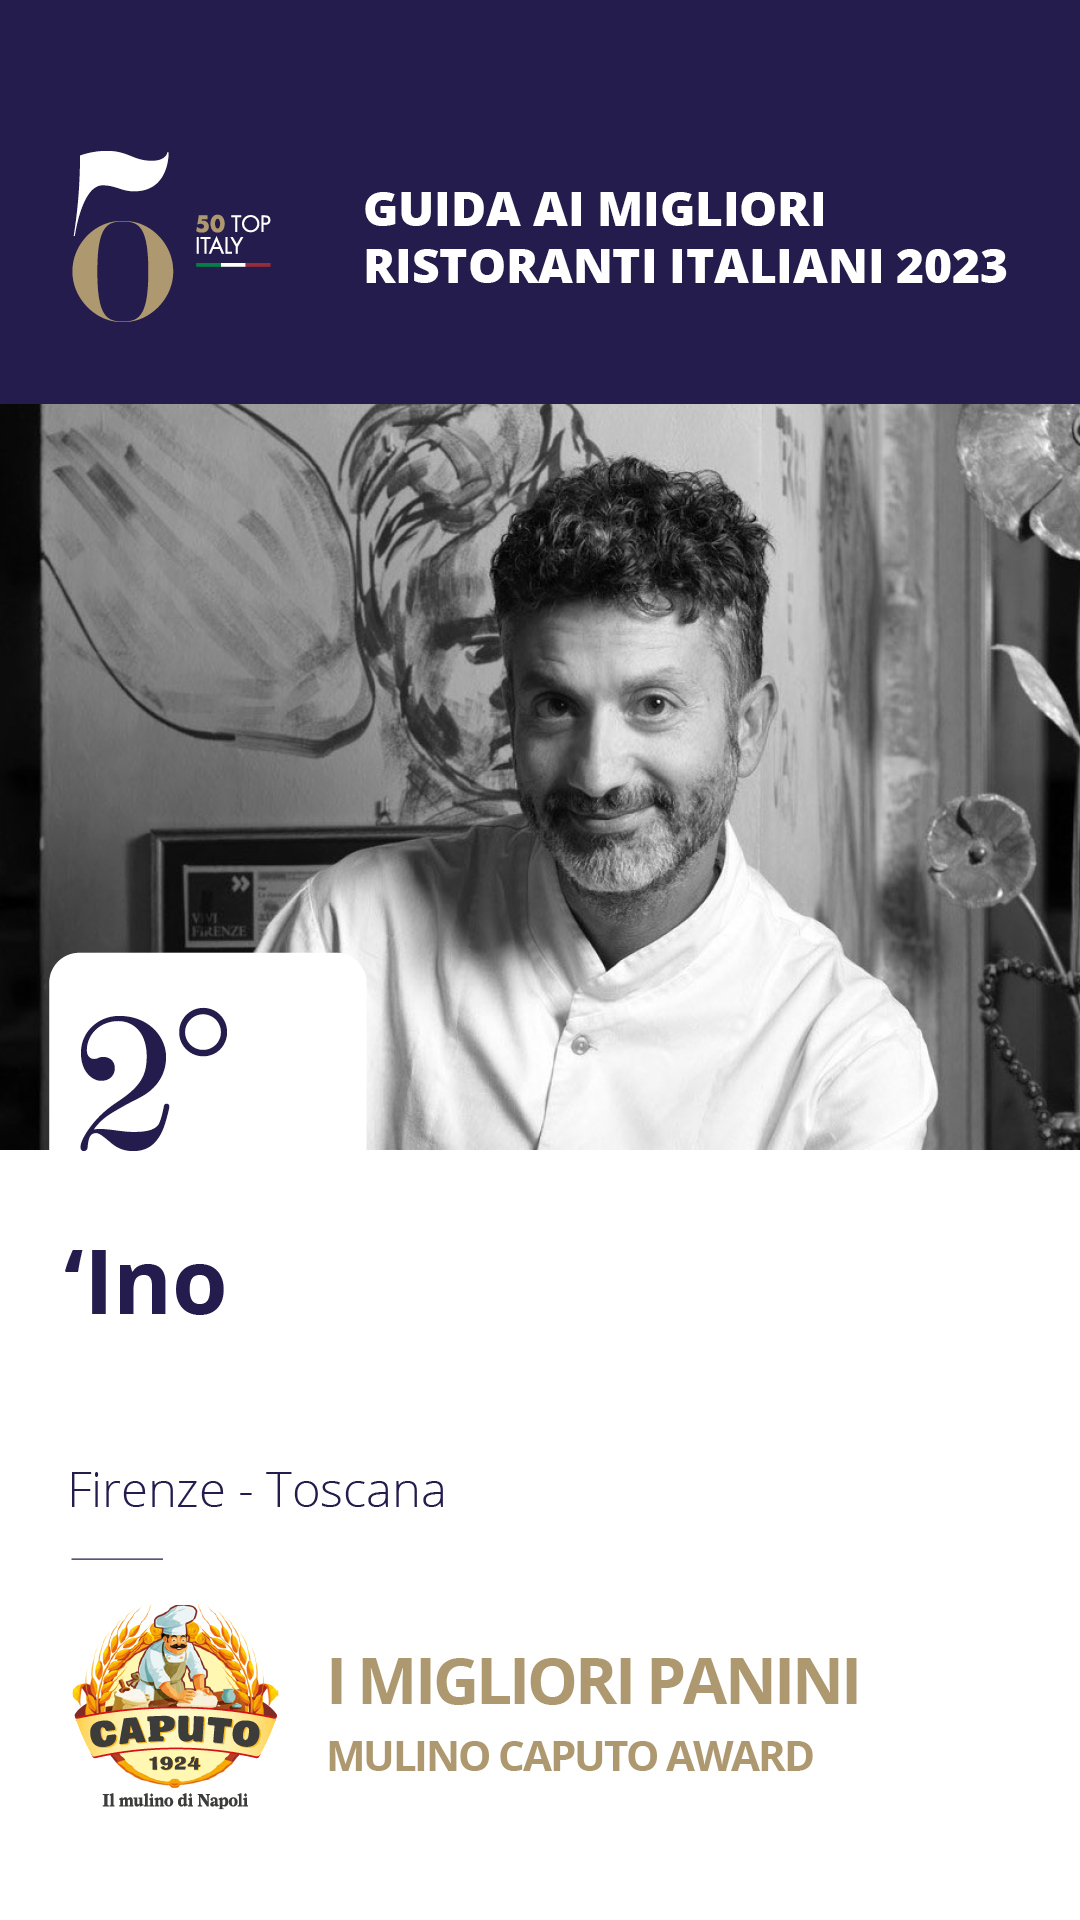 2 - 'Ino - Firenze, Toscana